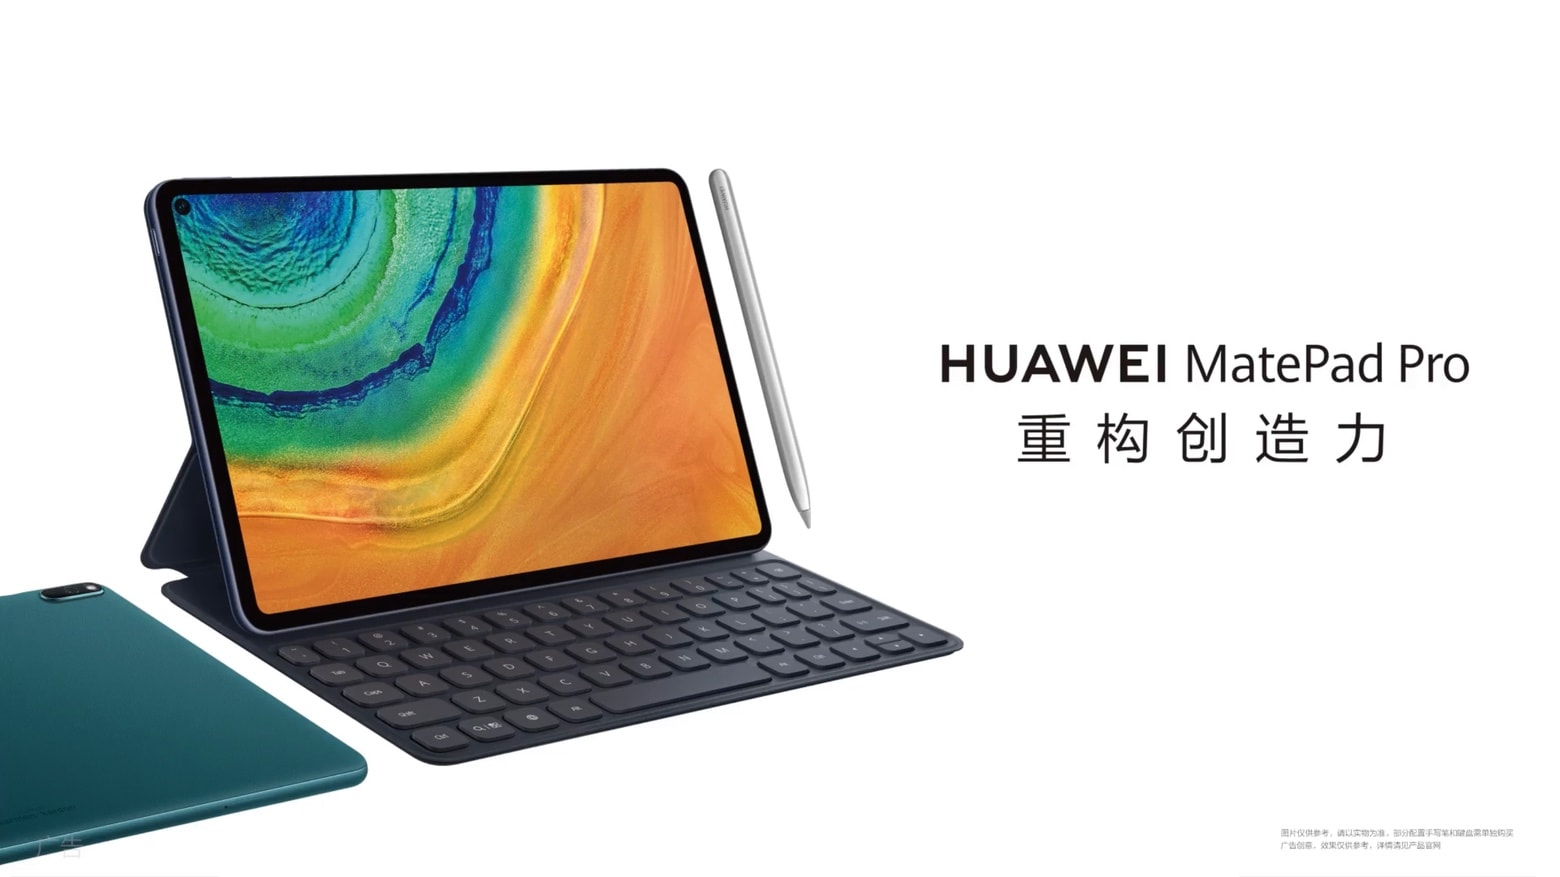 Huawei MatePad Pro is like an iPad Pro, but cheaper